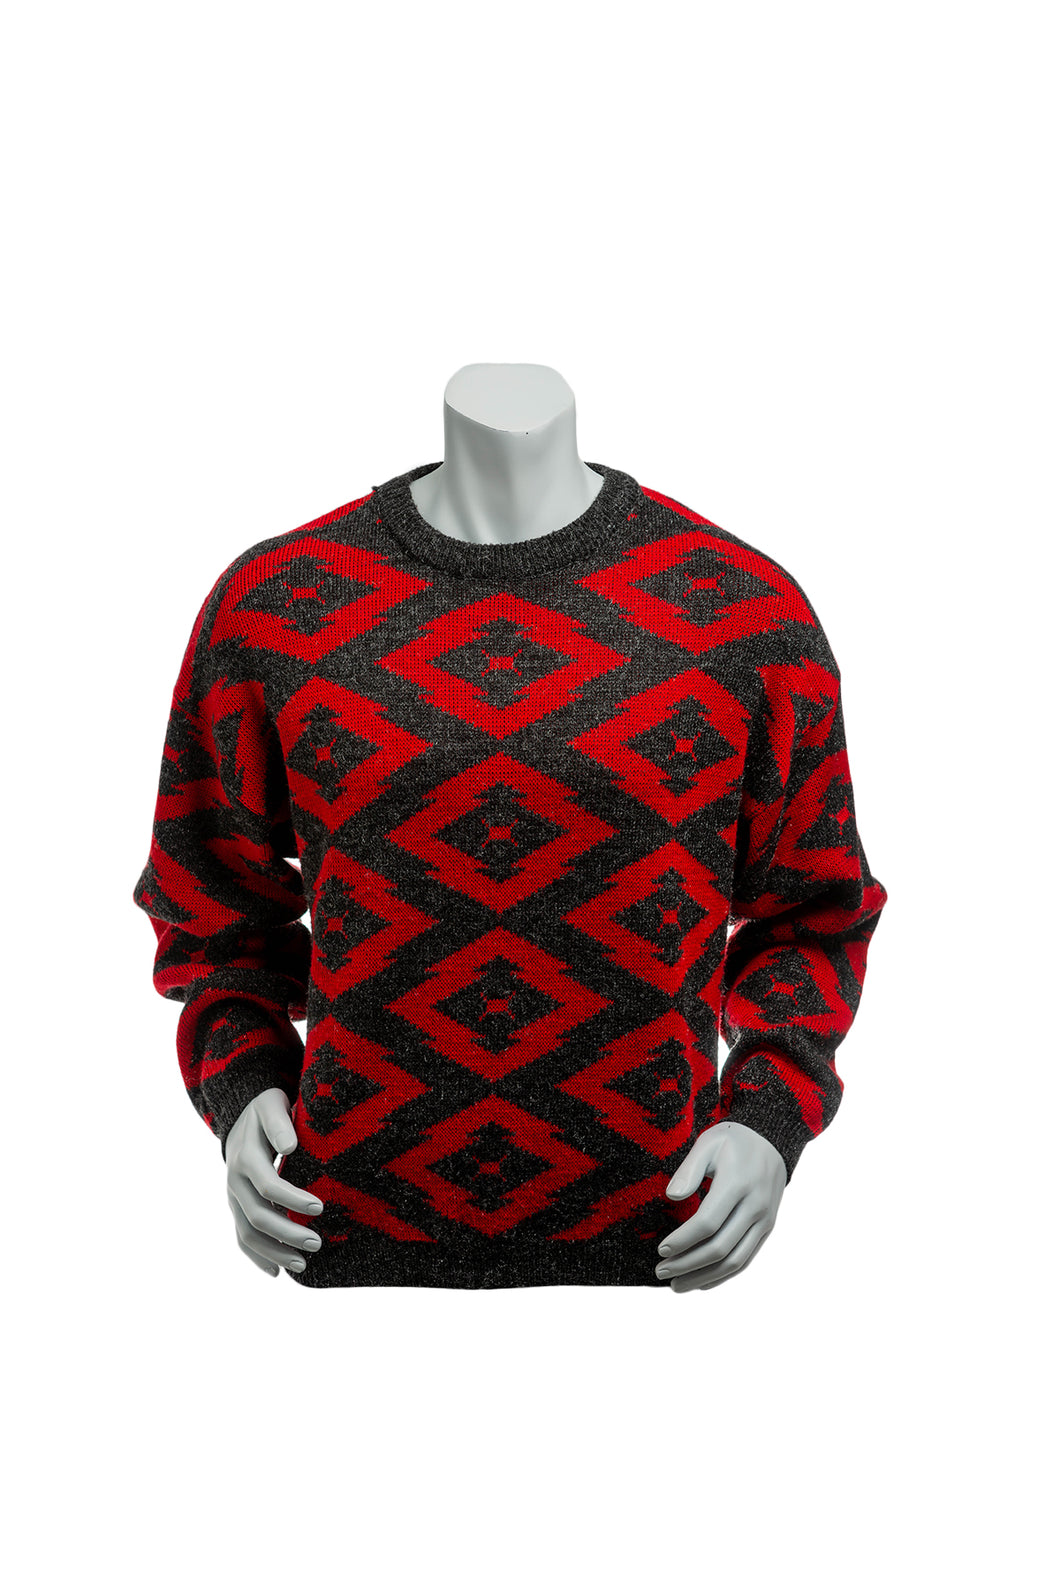 Vintage 90's Prince Bellini All Over Print Sweater Men's Medium